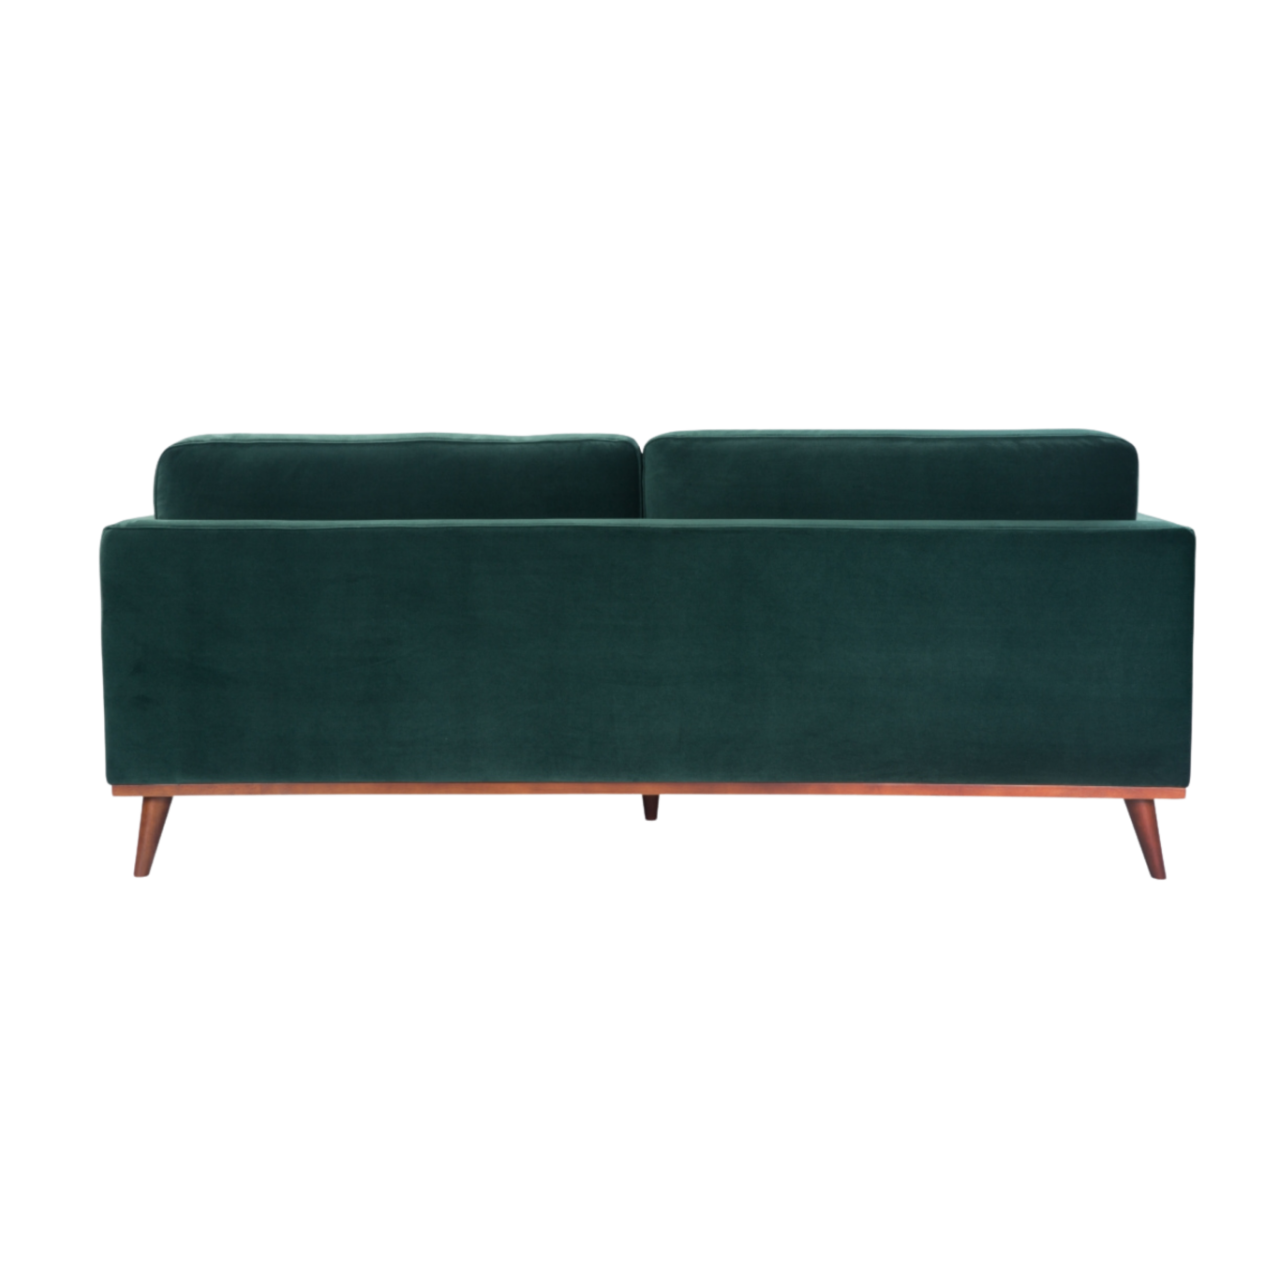 back view of simple modern 3 seater sofa in emerald green velvet